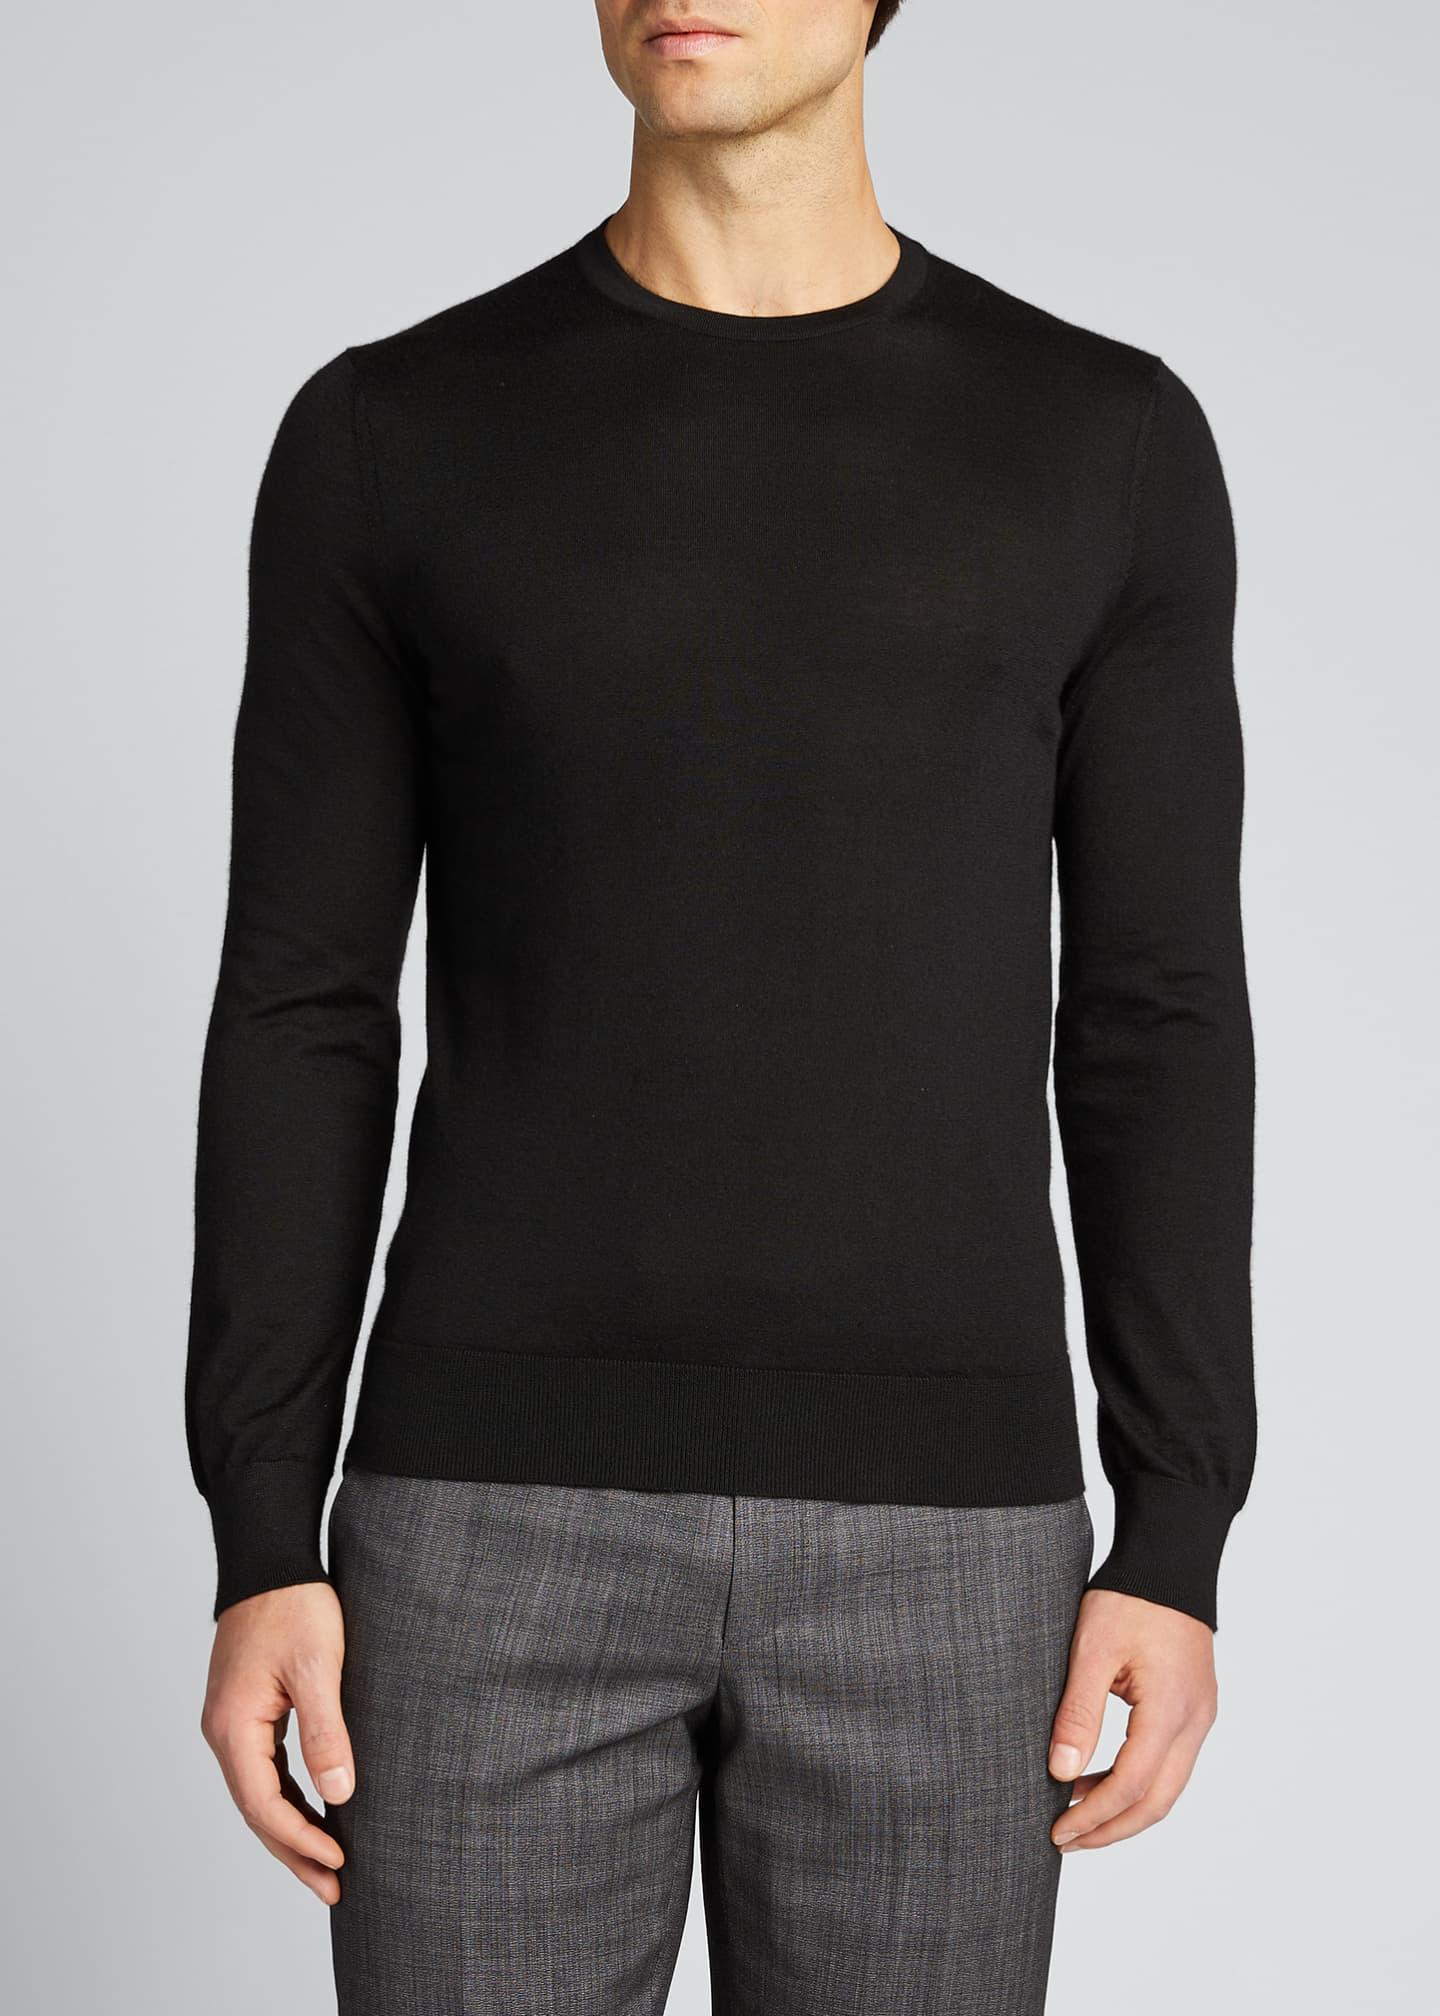 Ermenegildo Zegna Men's Solid Cashmere-silk Sweater in Black for Men - Lyst